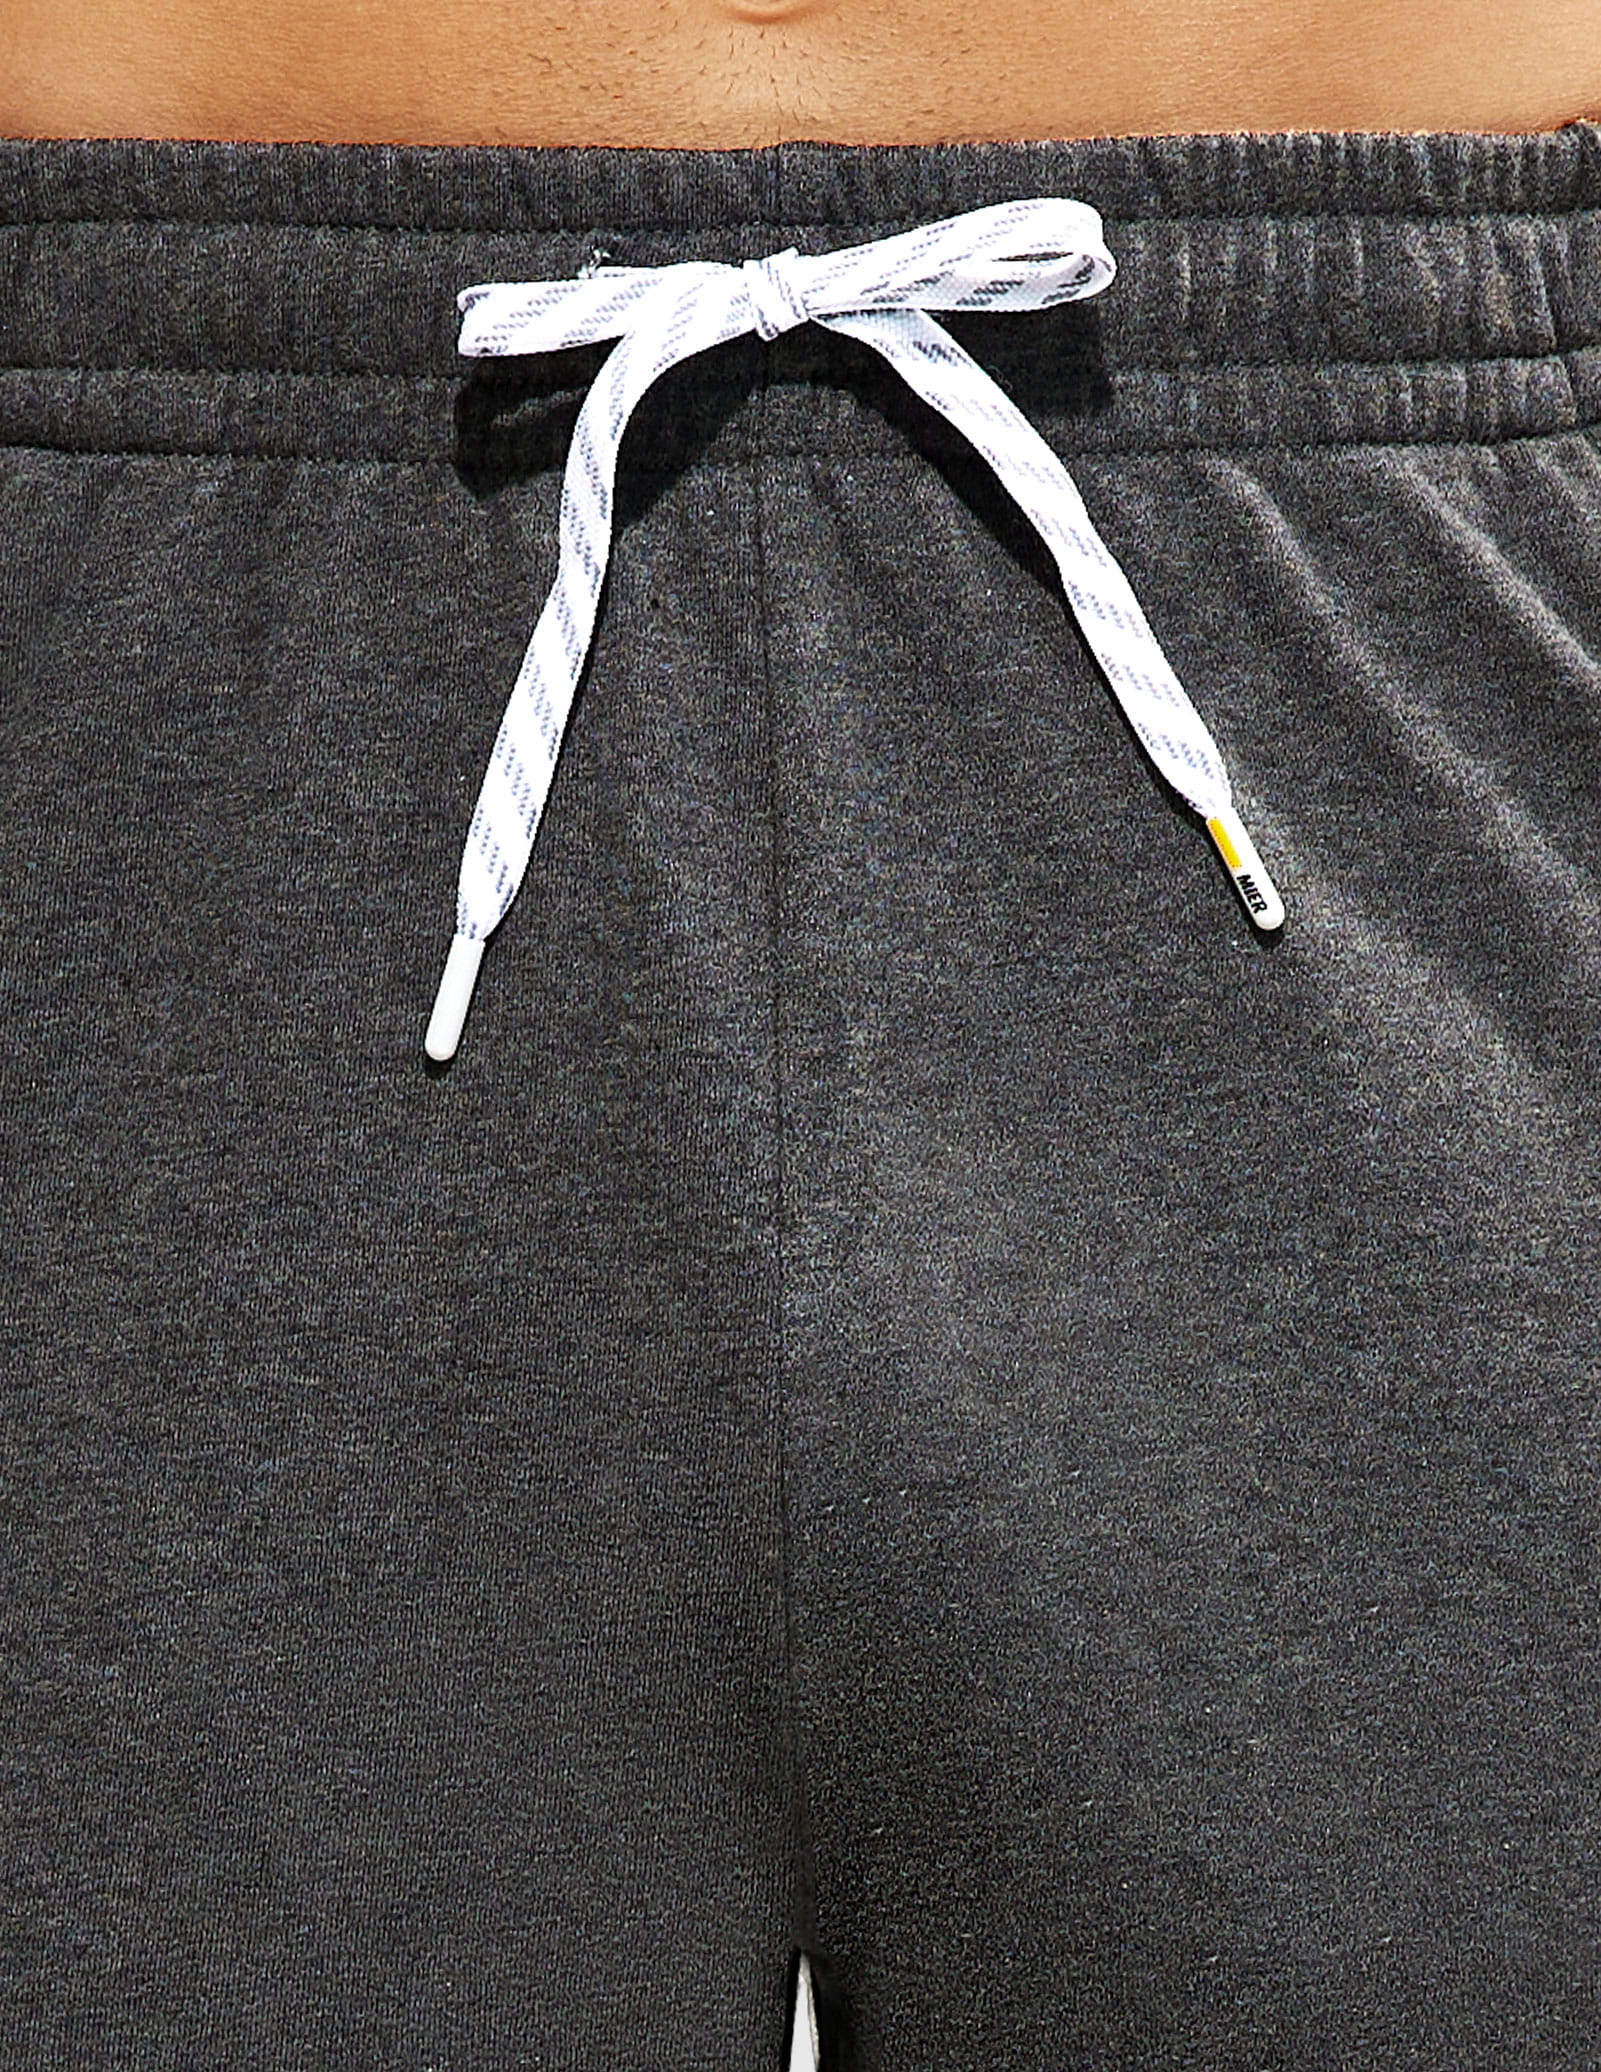 Men's Cotton Joggers Athletic Sweatpants with Pockets